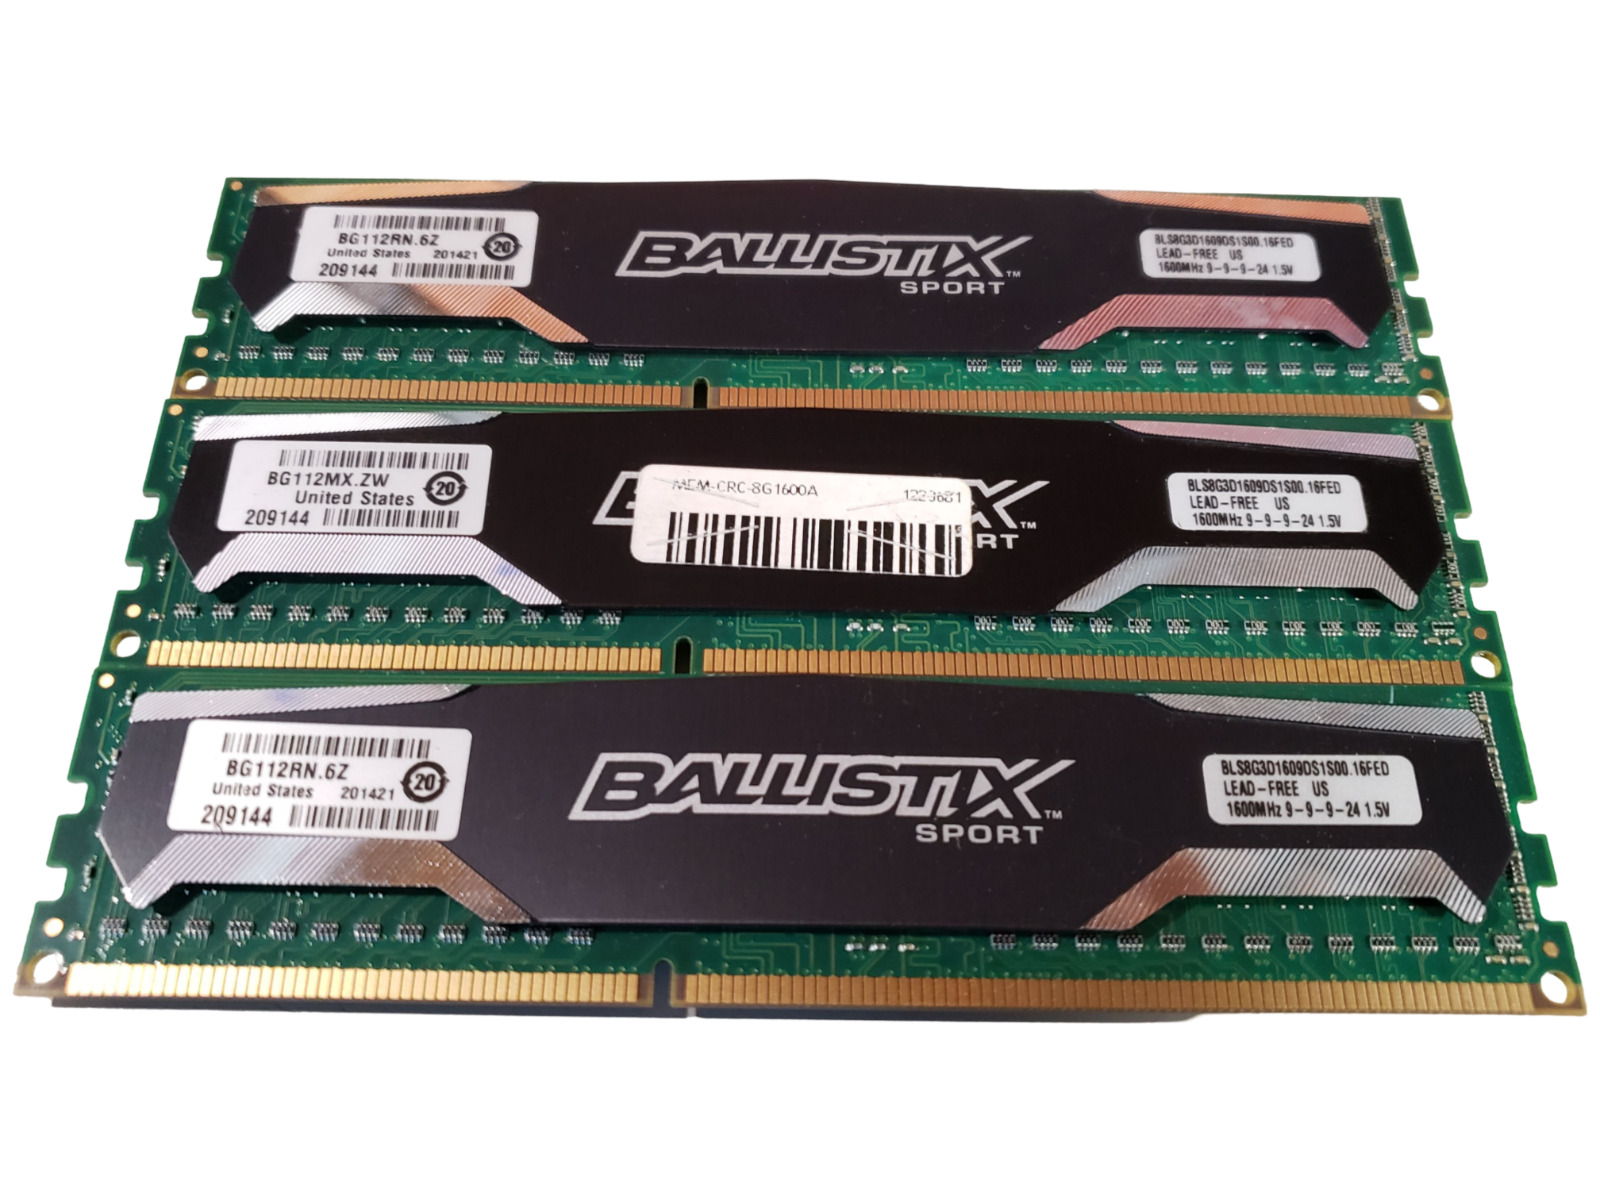 (3 Piece) Crucial Ballistix Sport BLS8G3D1609DS1S00 DDR3-1600 24GB (3x8GB) RAM